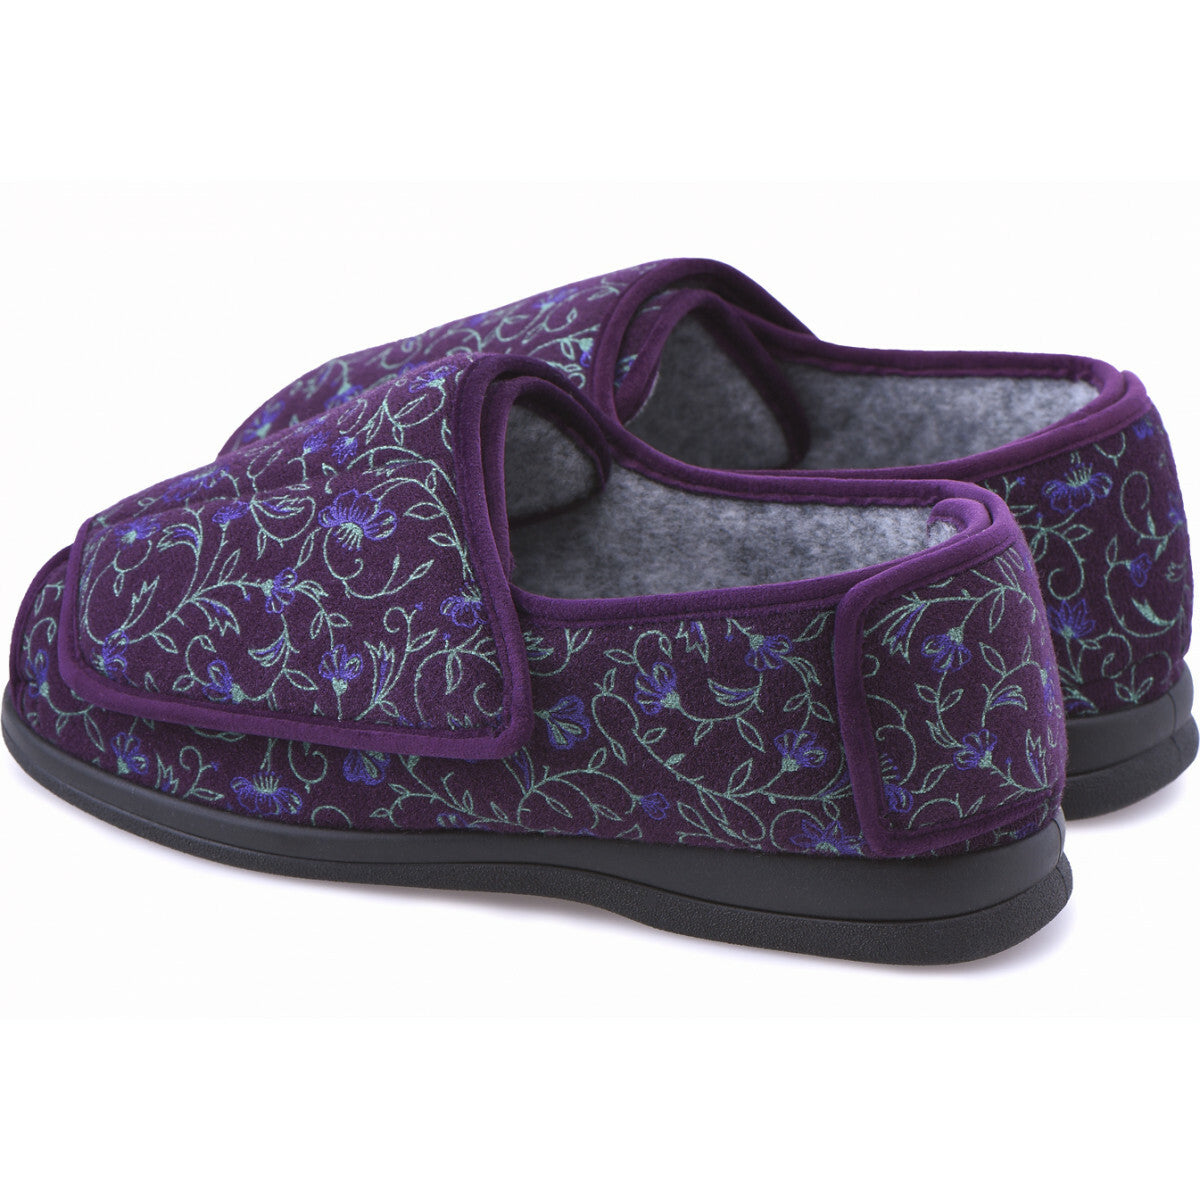 ultra adjustable extra wide slipper